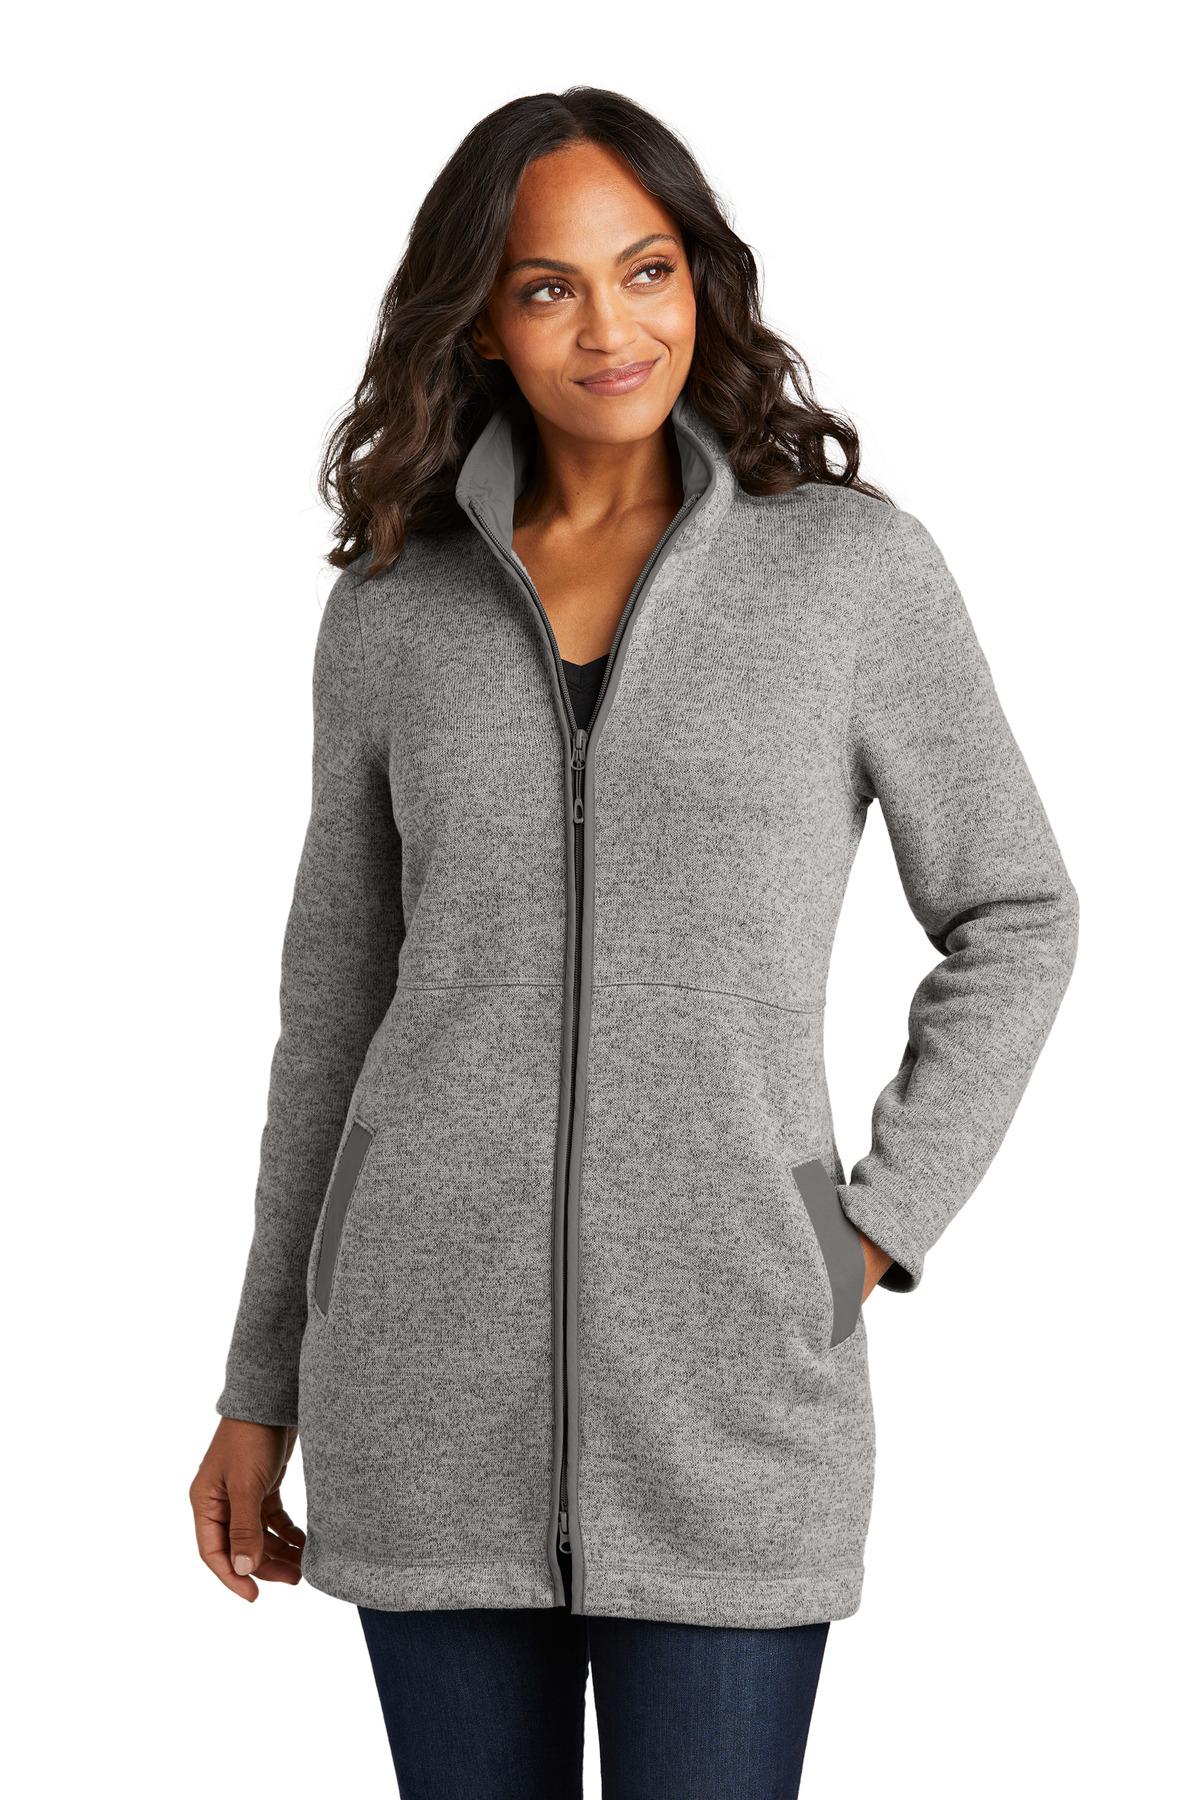 Port Authority Ladies Arc Sweater Fleece Long Jacket-Port Authority